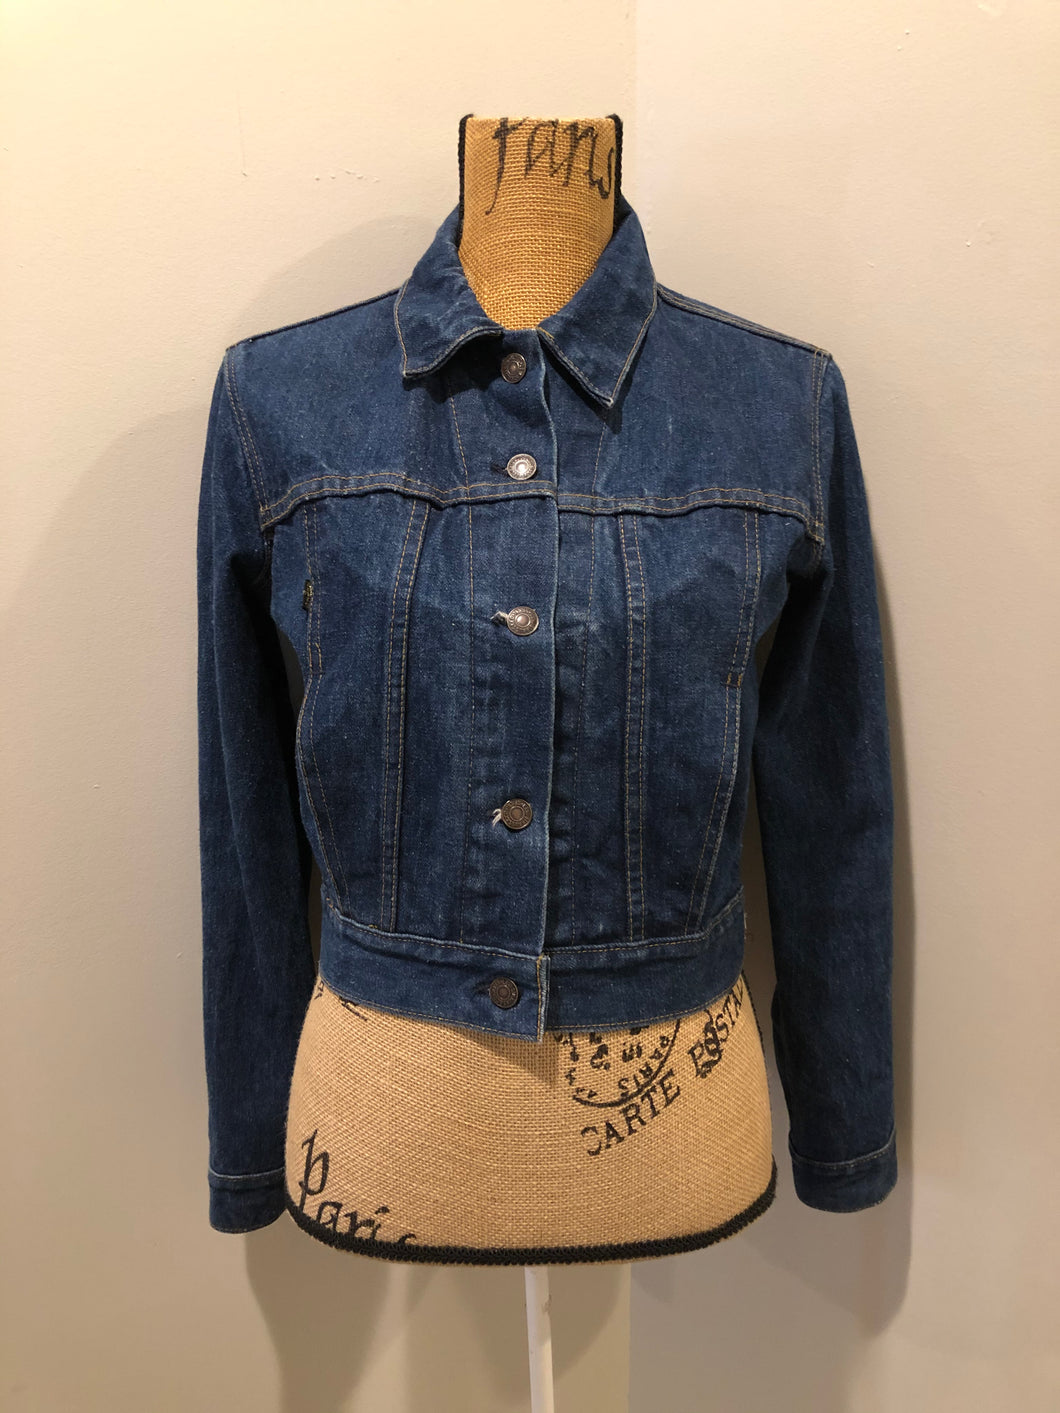 Kingspier Vintage - Levi’s denim jacket in a medium wash with button closures, hand warmer pockets, size medium.